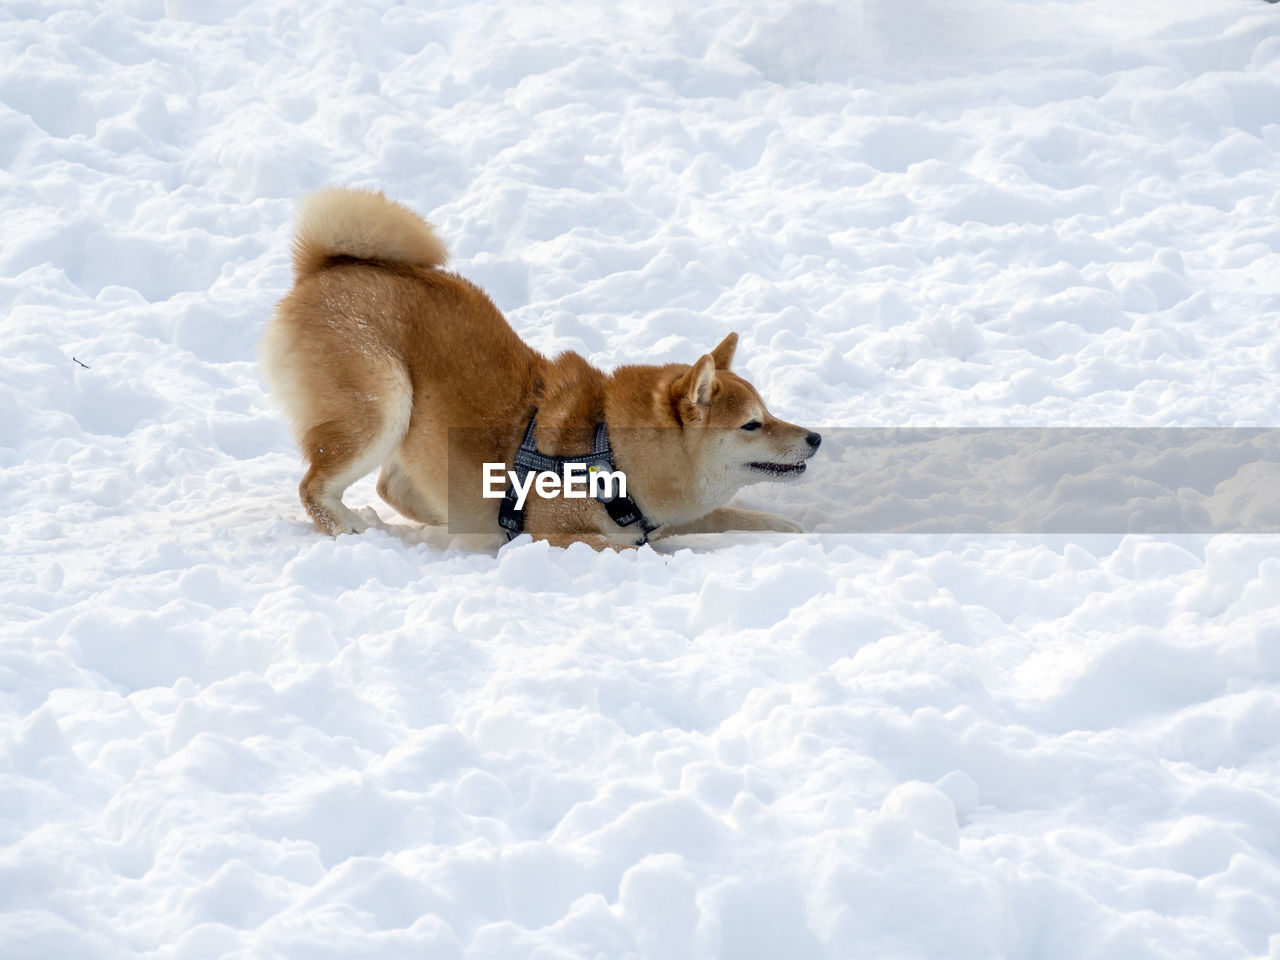 dogs running on snow